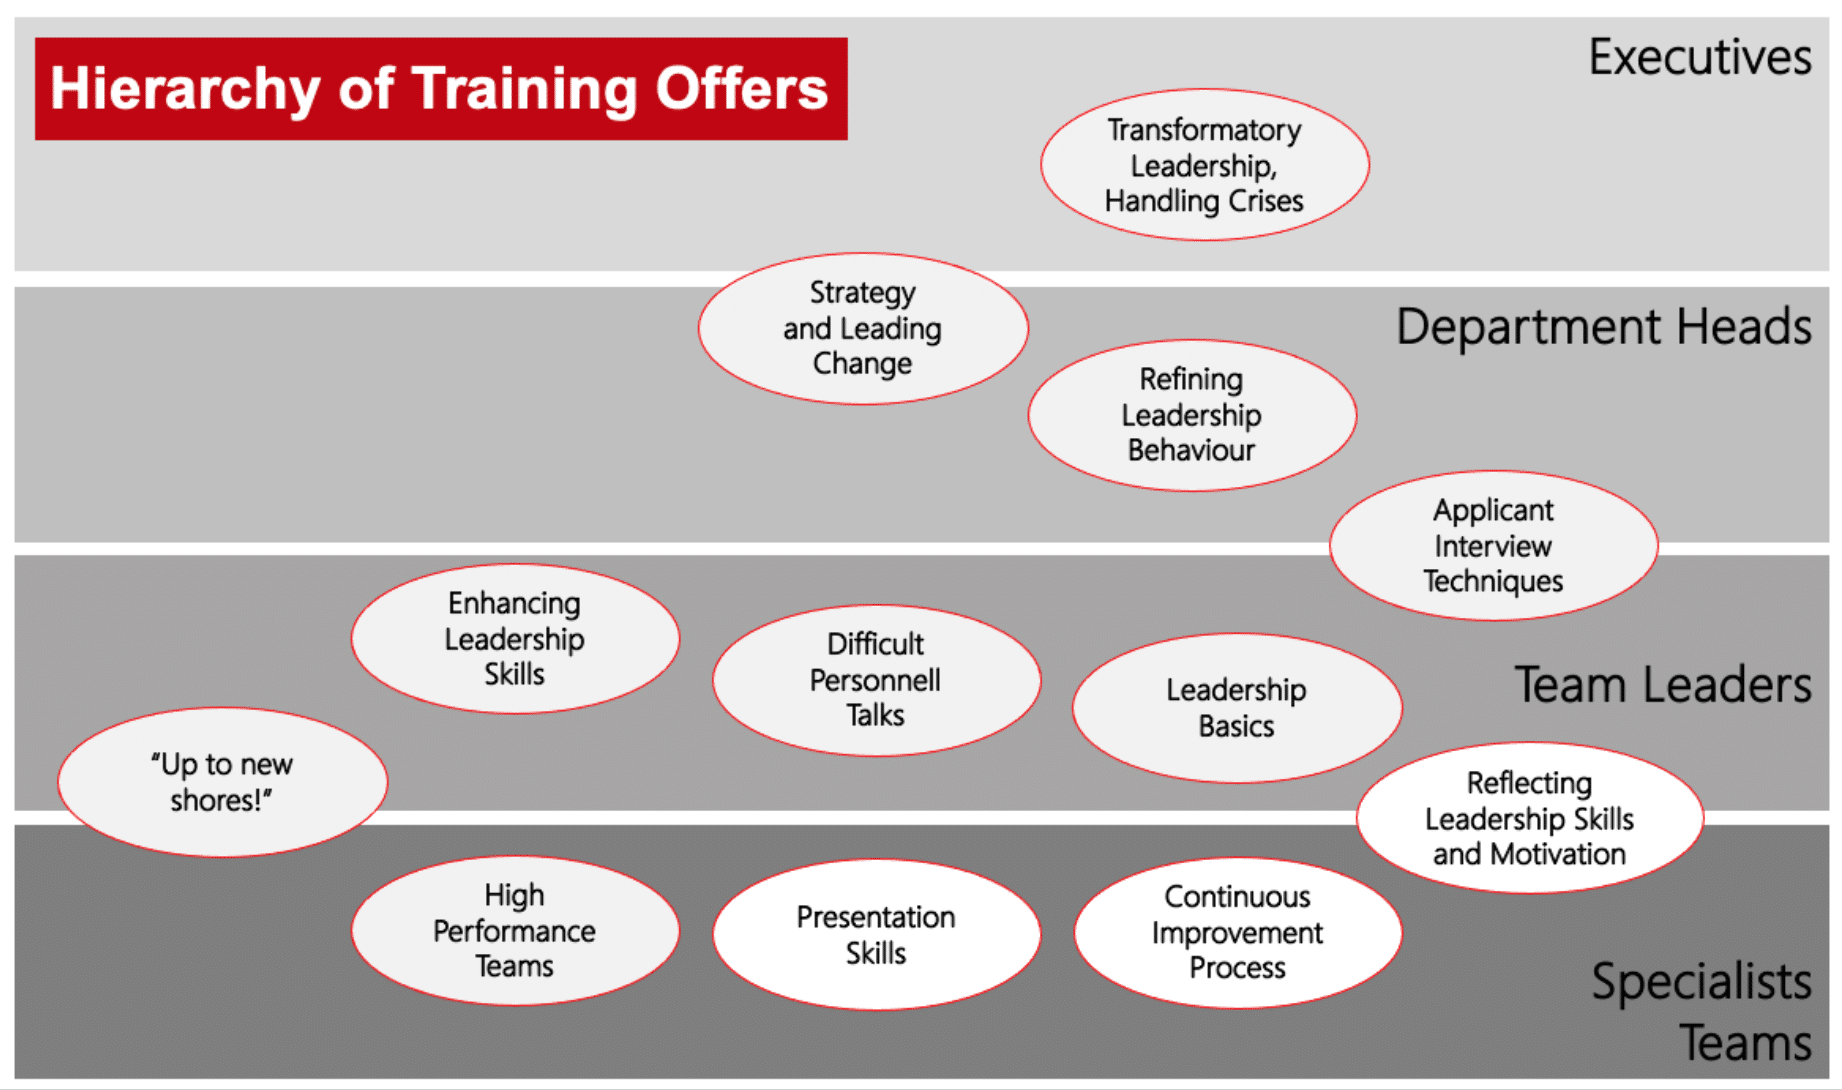 Training offers